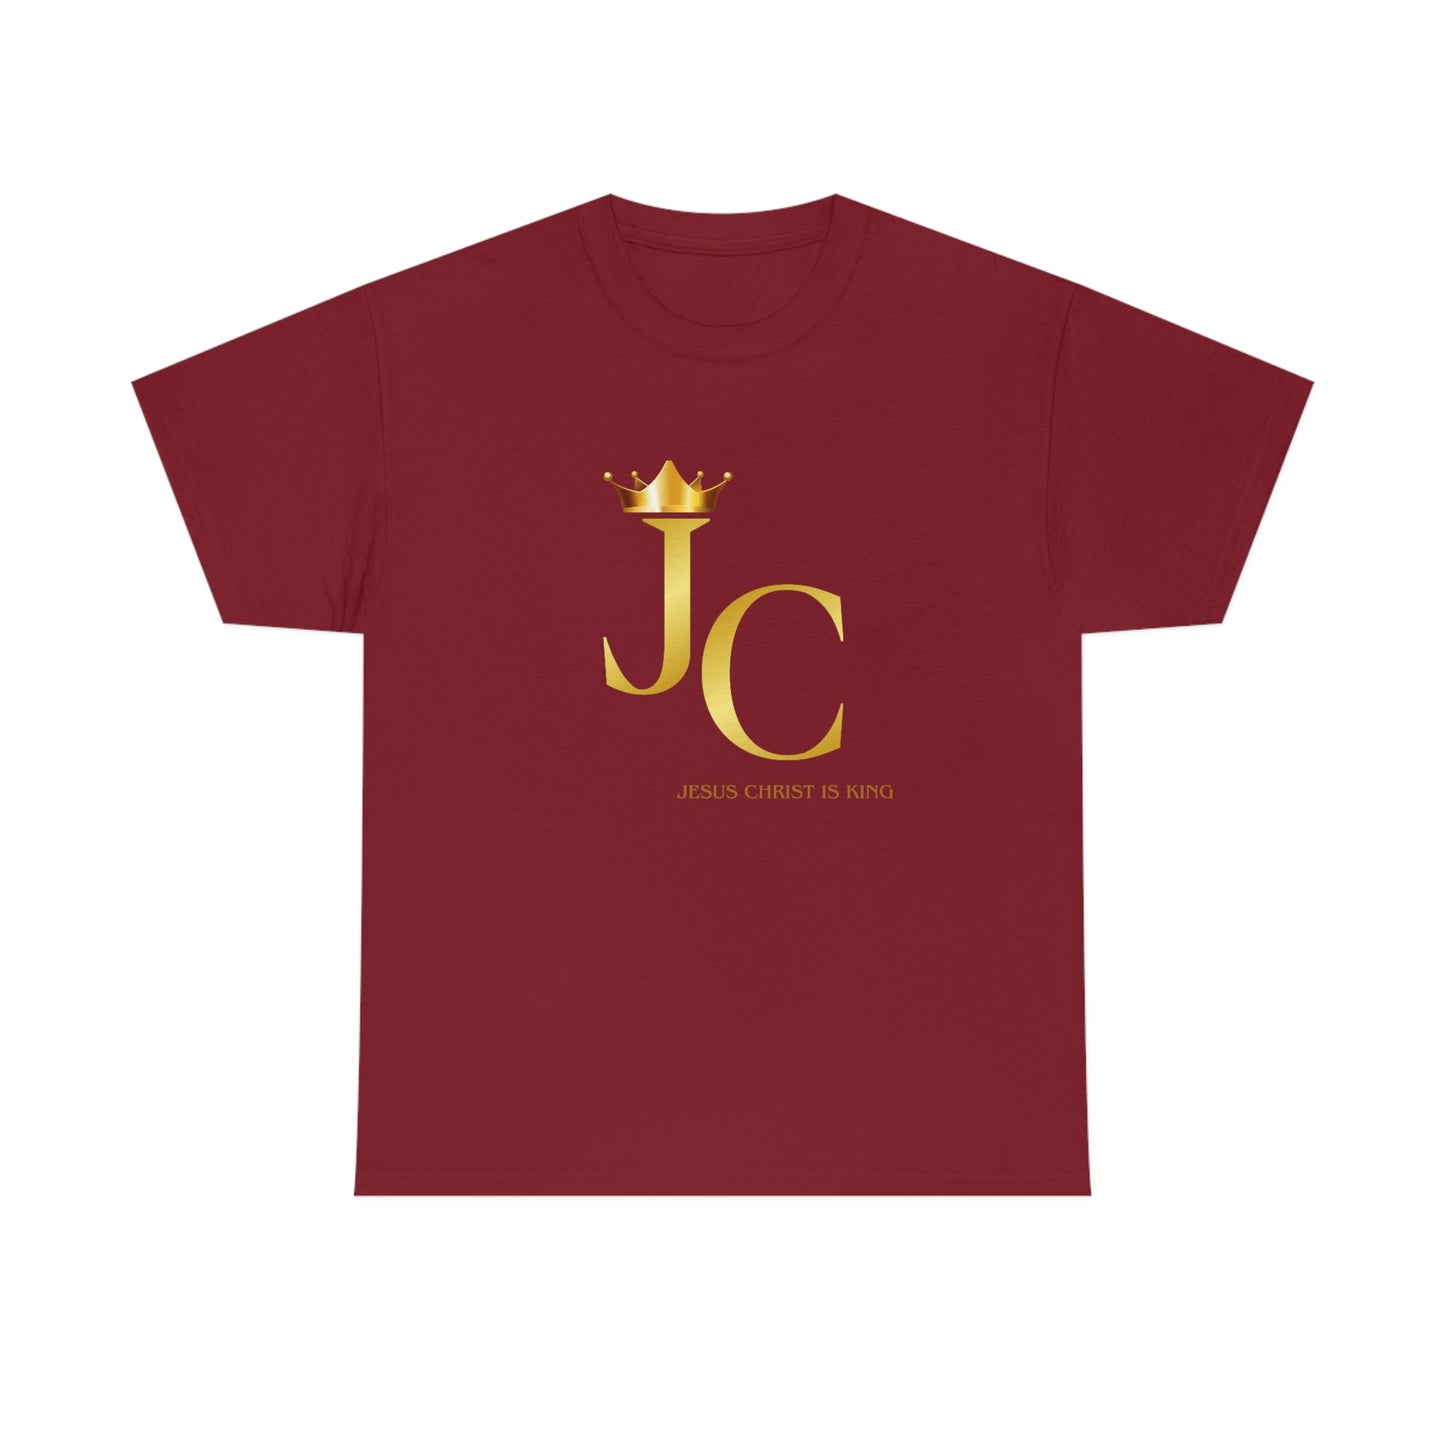 JC (JESUS CHRIST IS KING) T-SHIRT